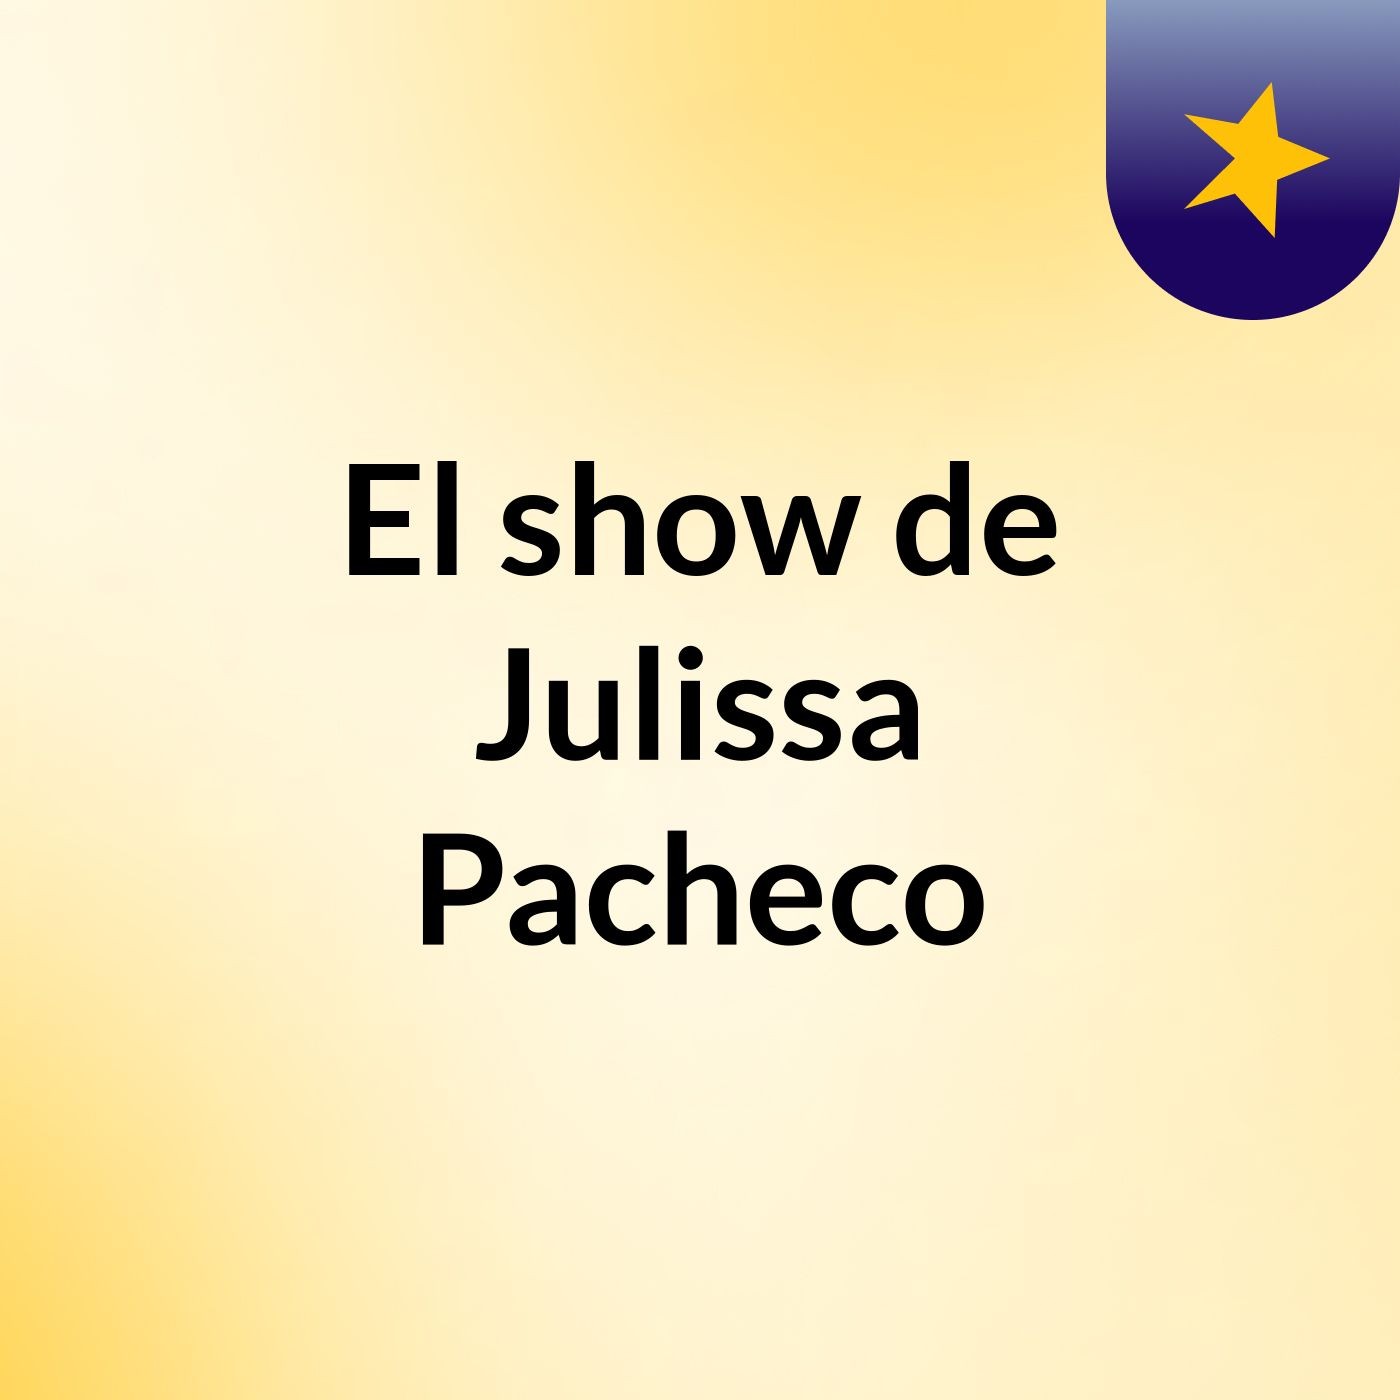 El show de Julissa Pacheco